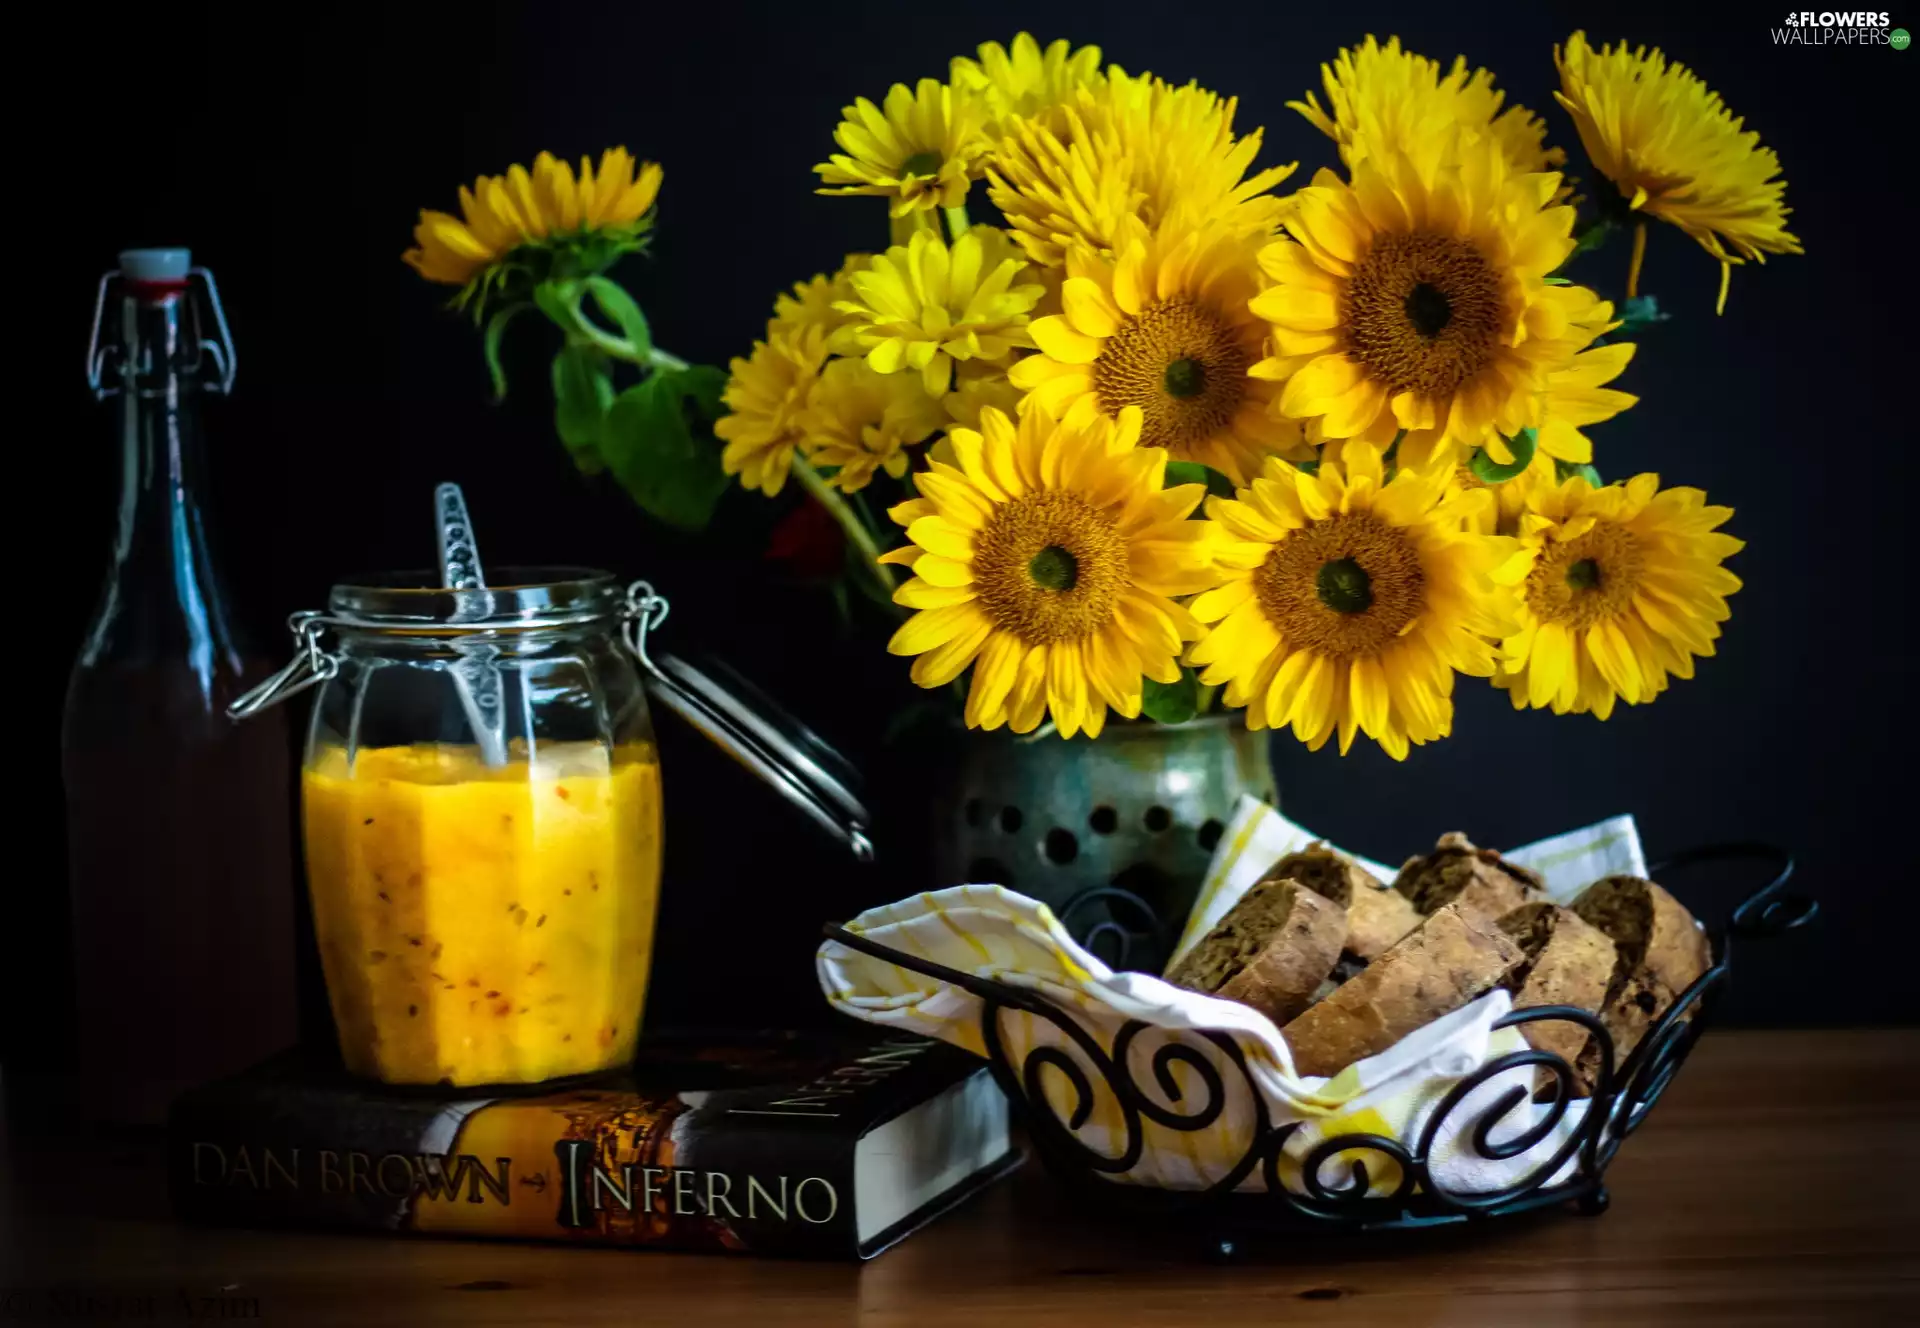 Flowers, Jam, bread, sunflowers